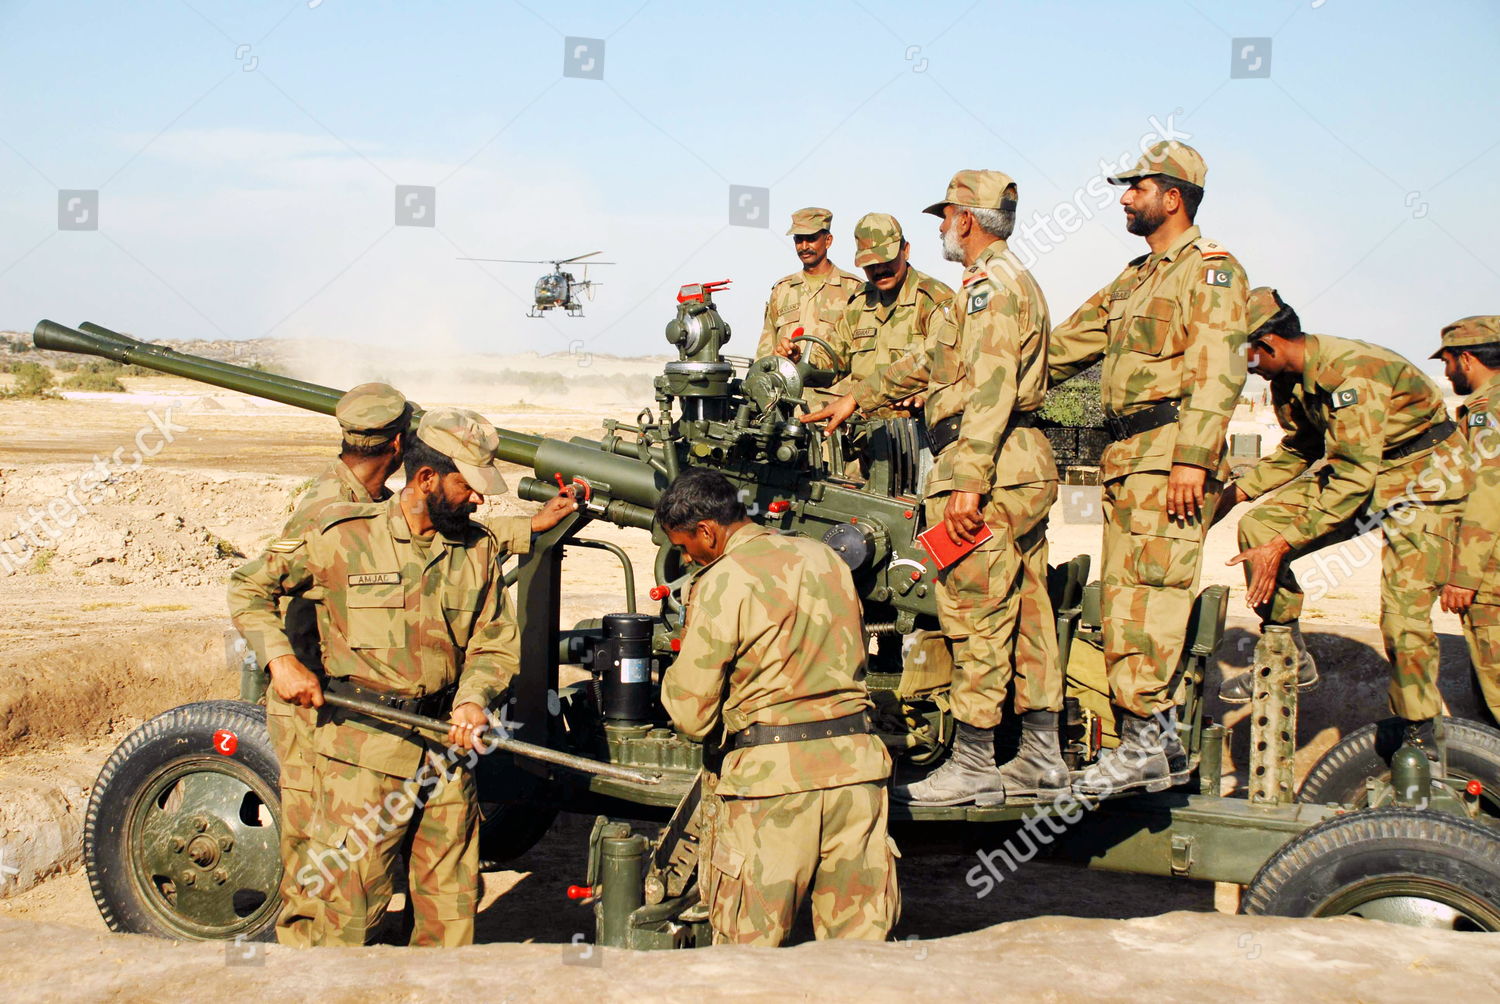 pakistan-military-exercises-jan-2010-shutterstock-editorial-7736850a.jpg